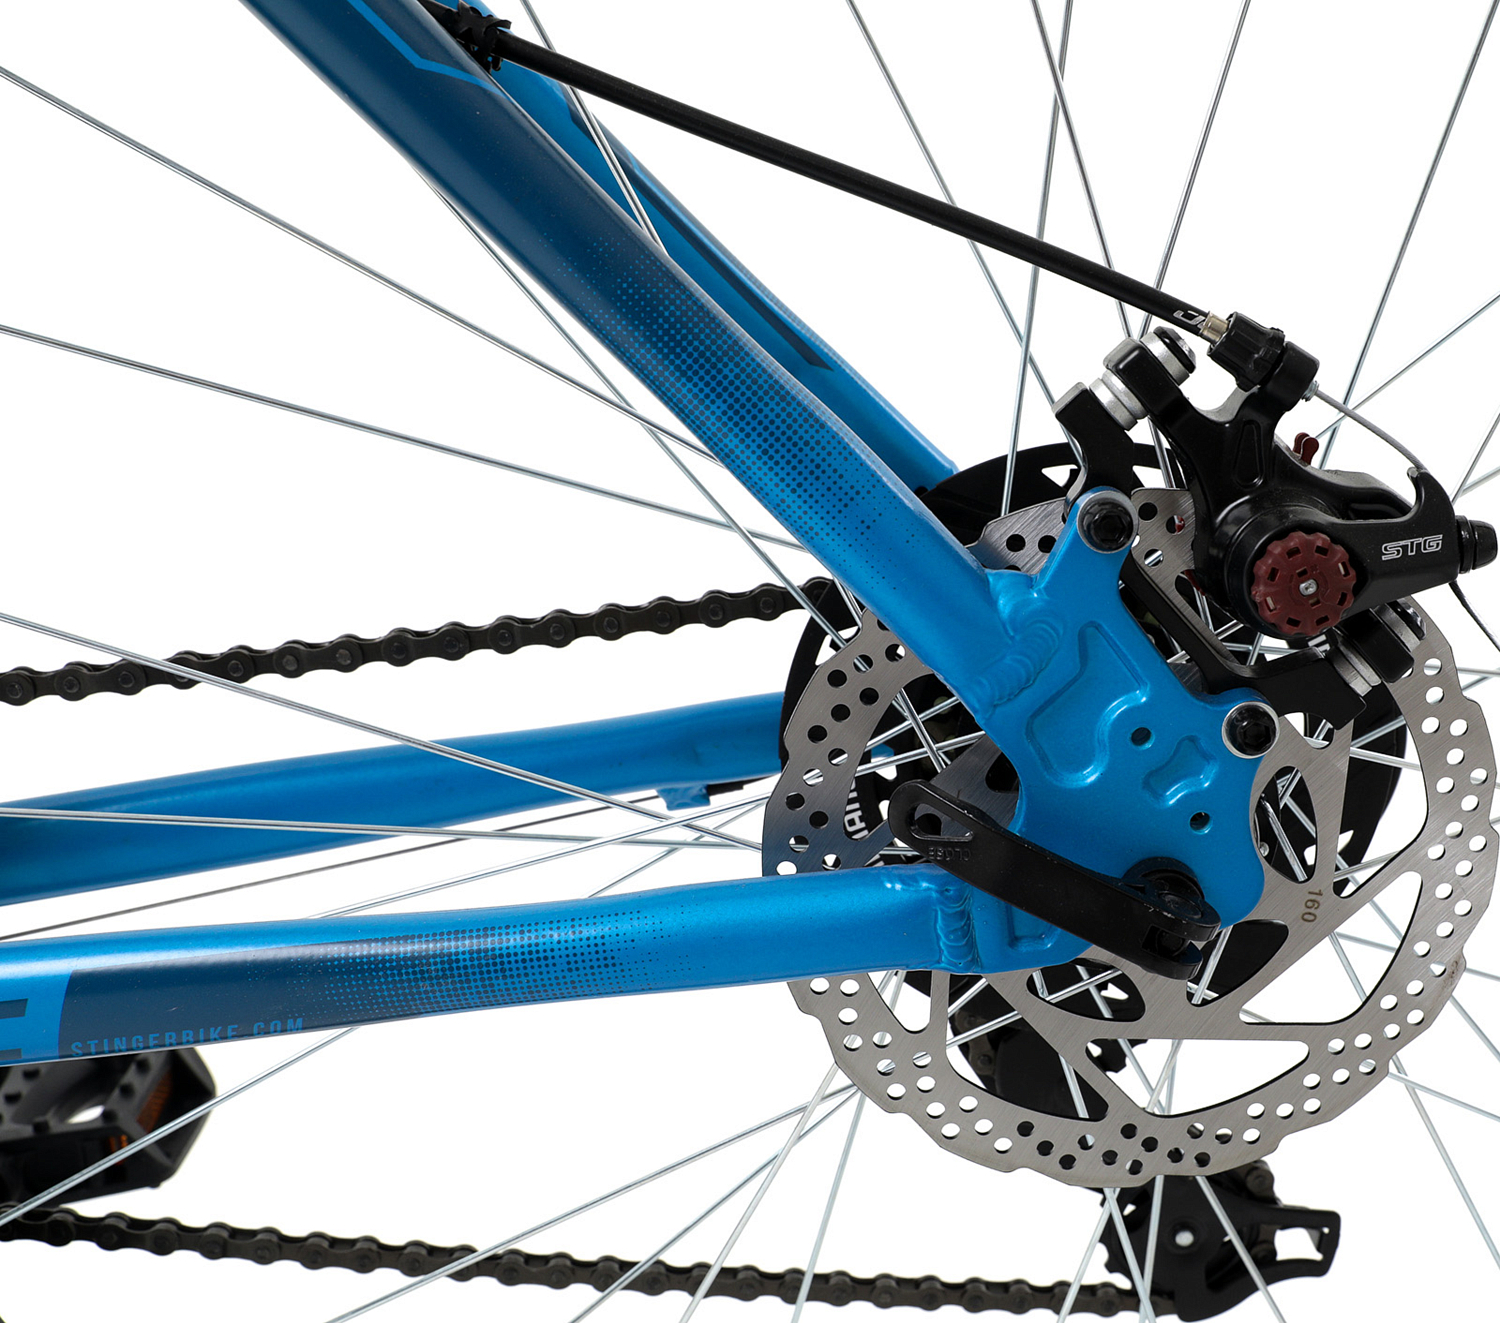 Велосипед Stinger Element Evo 29 Синий